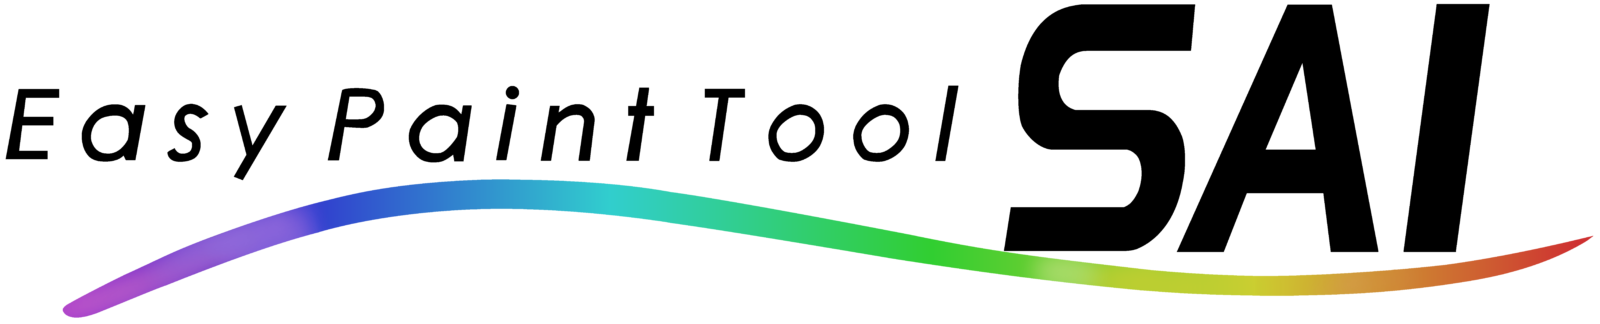 Paint Tool Sai Logo